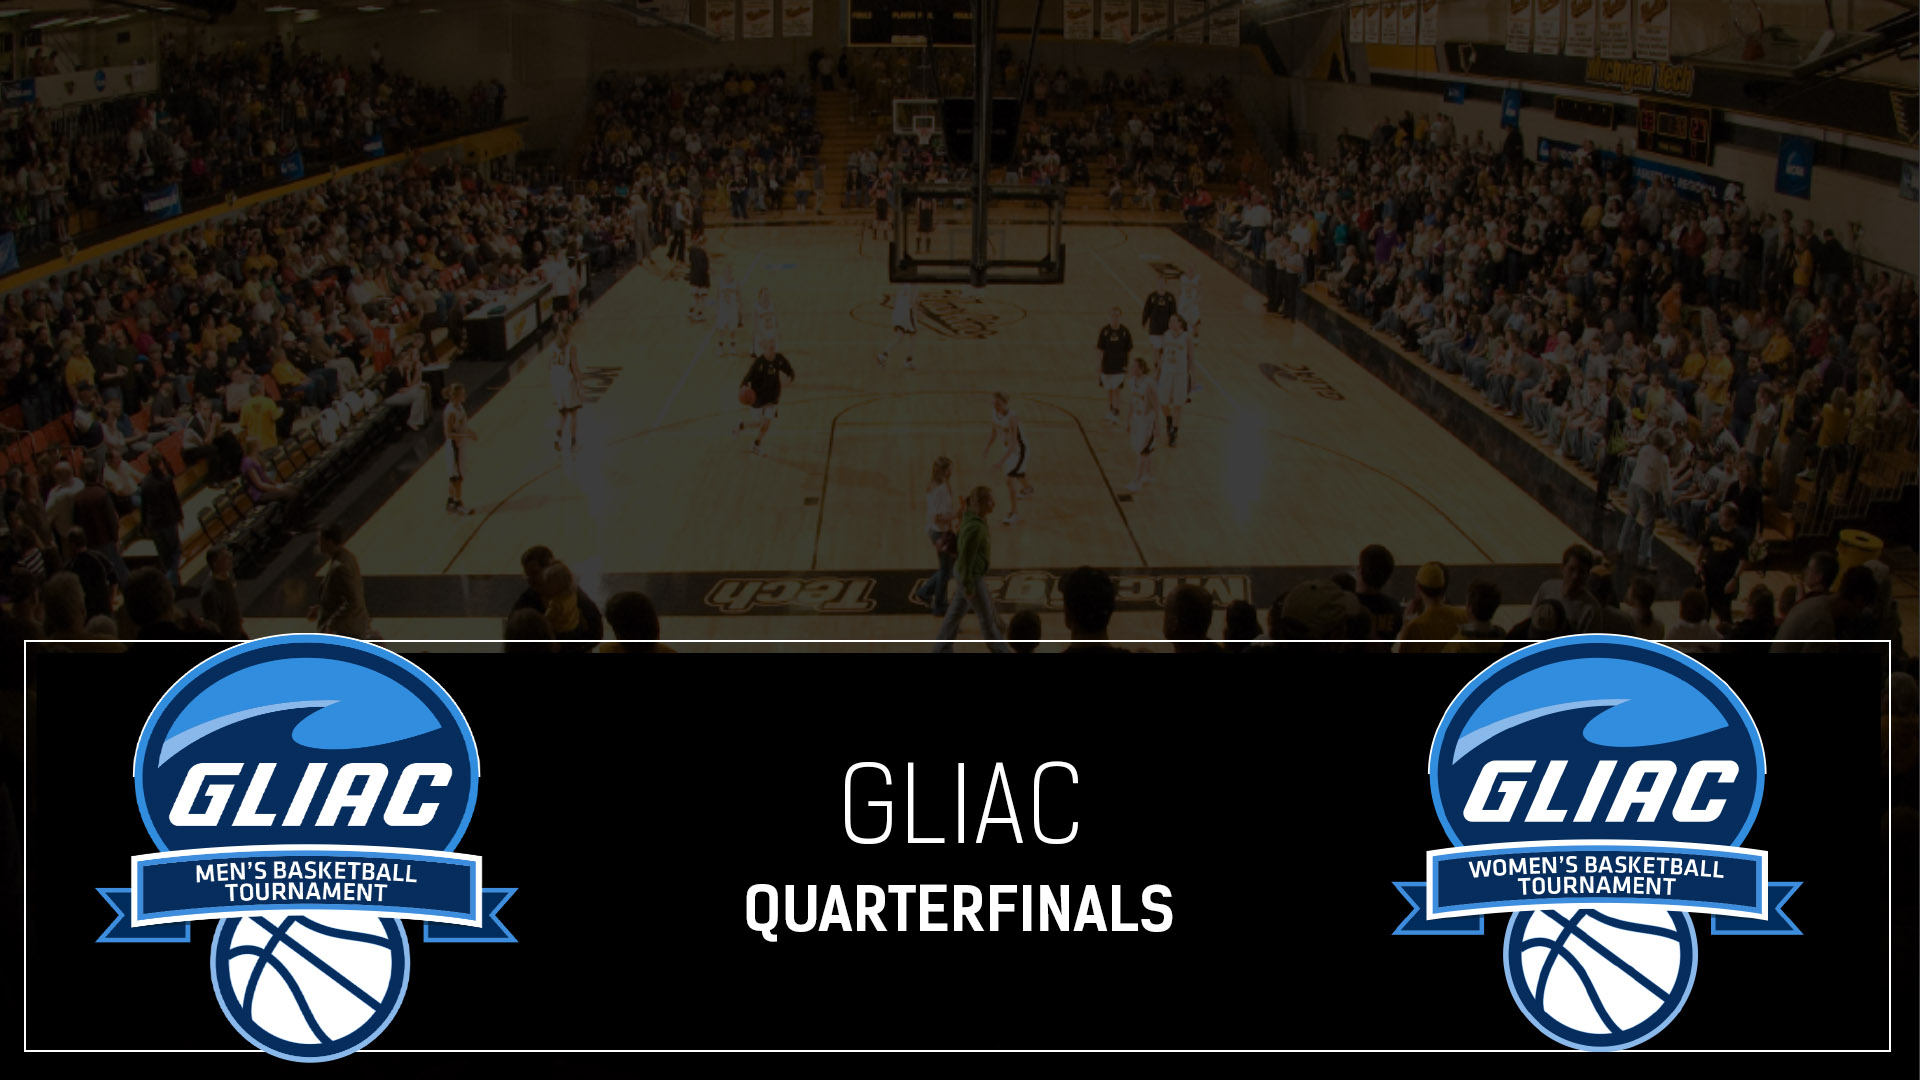 GLIAC Quarterfinal Basketball Tickets On Sale Now